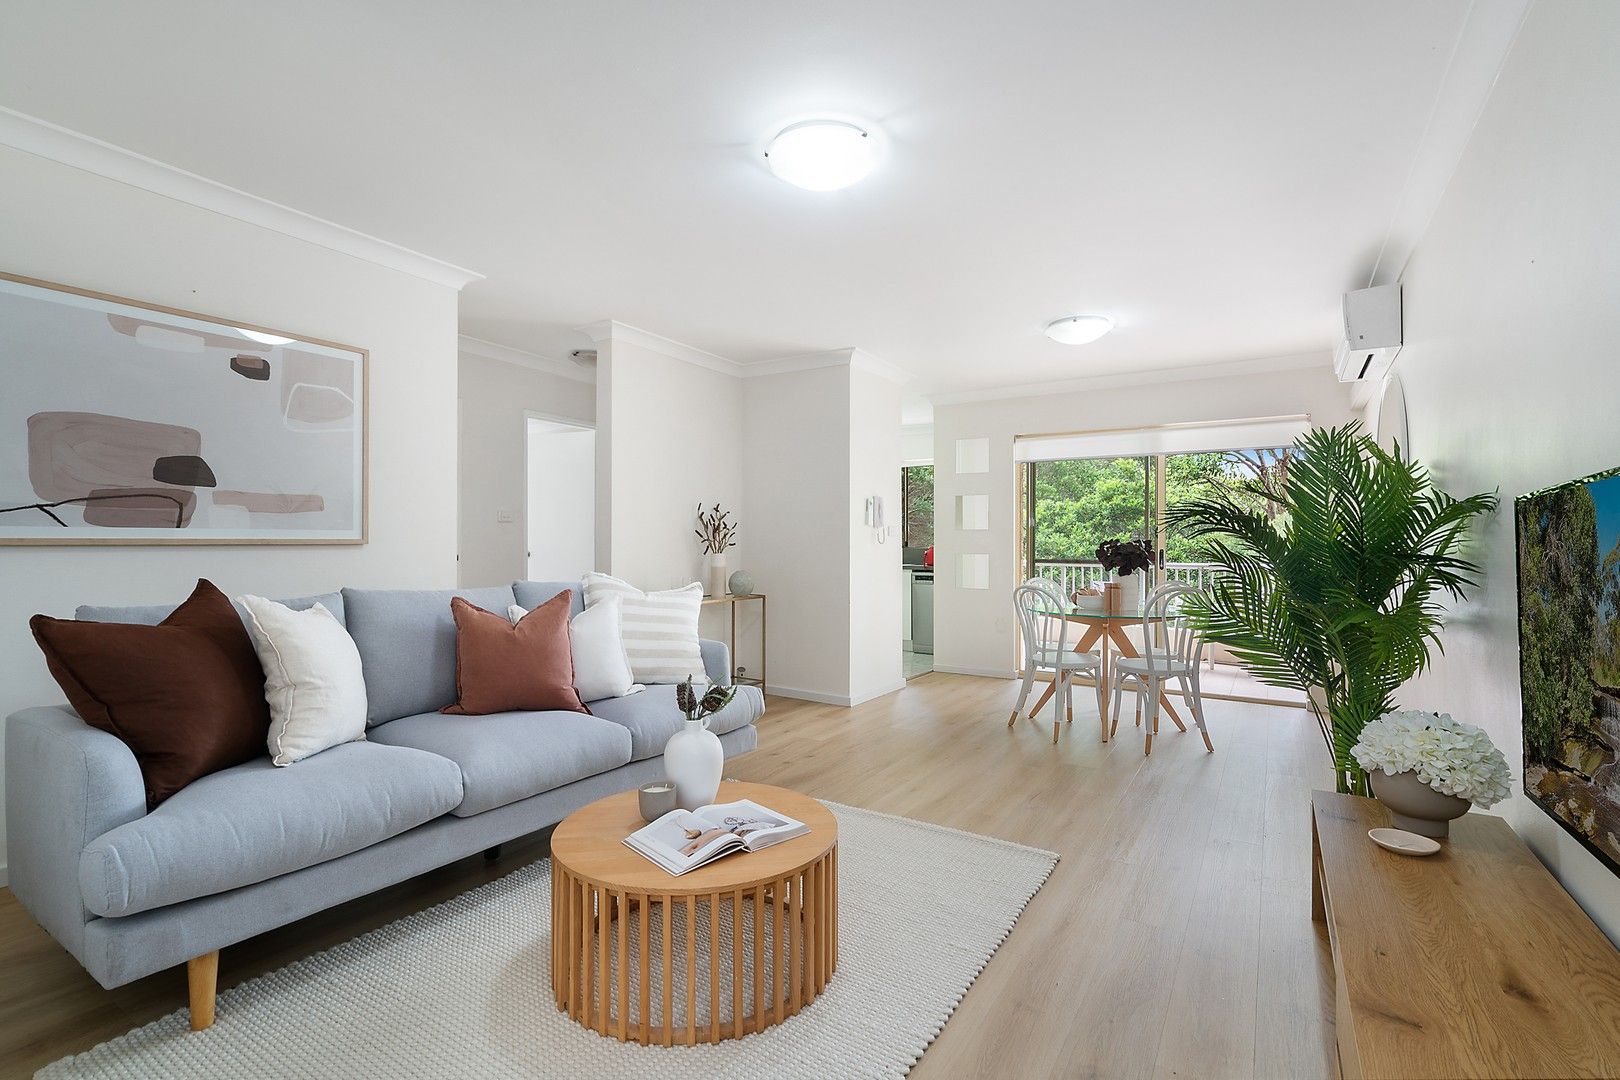 2 bedrooms Apartment / Unit / Flat in 3/18 Chapel Street ROCKDALE NSW, 2216